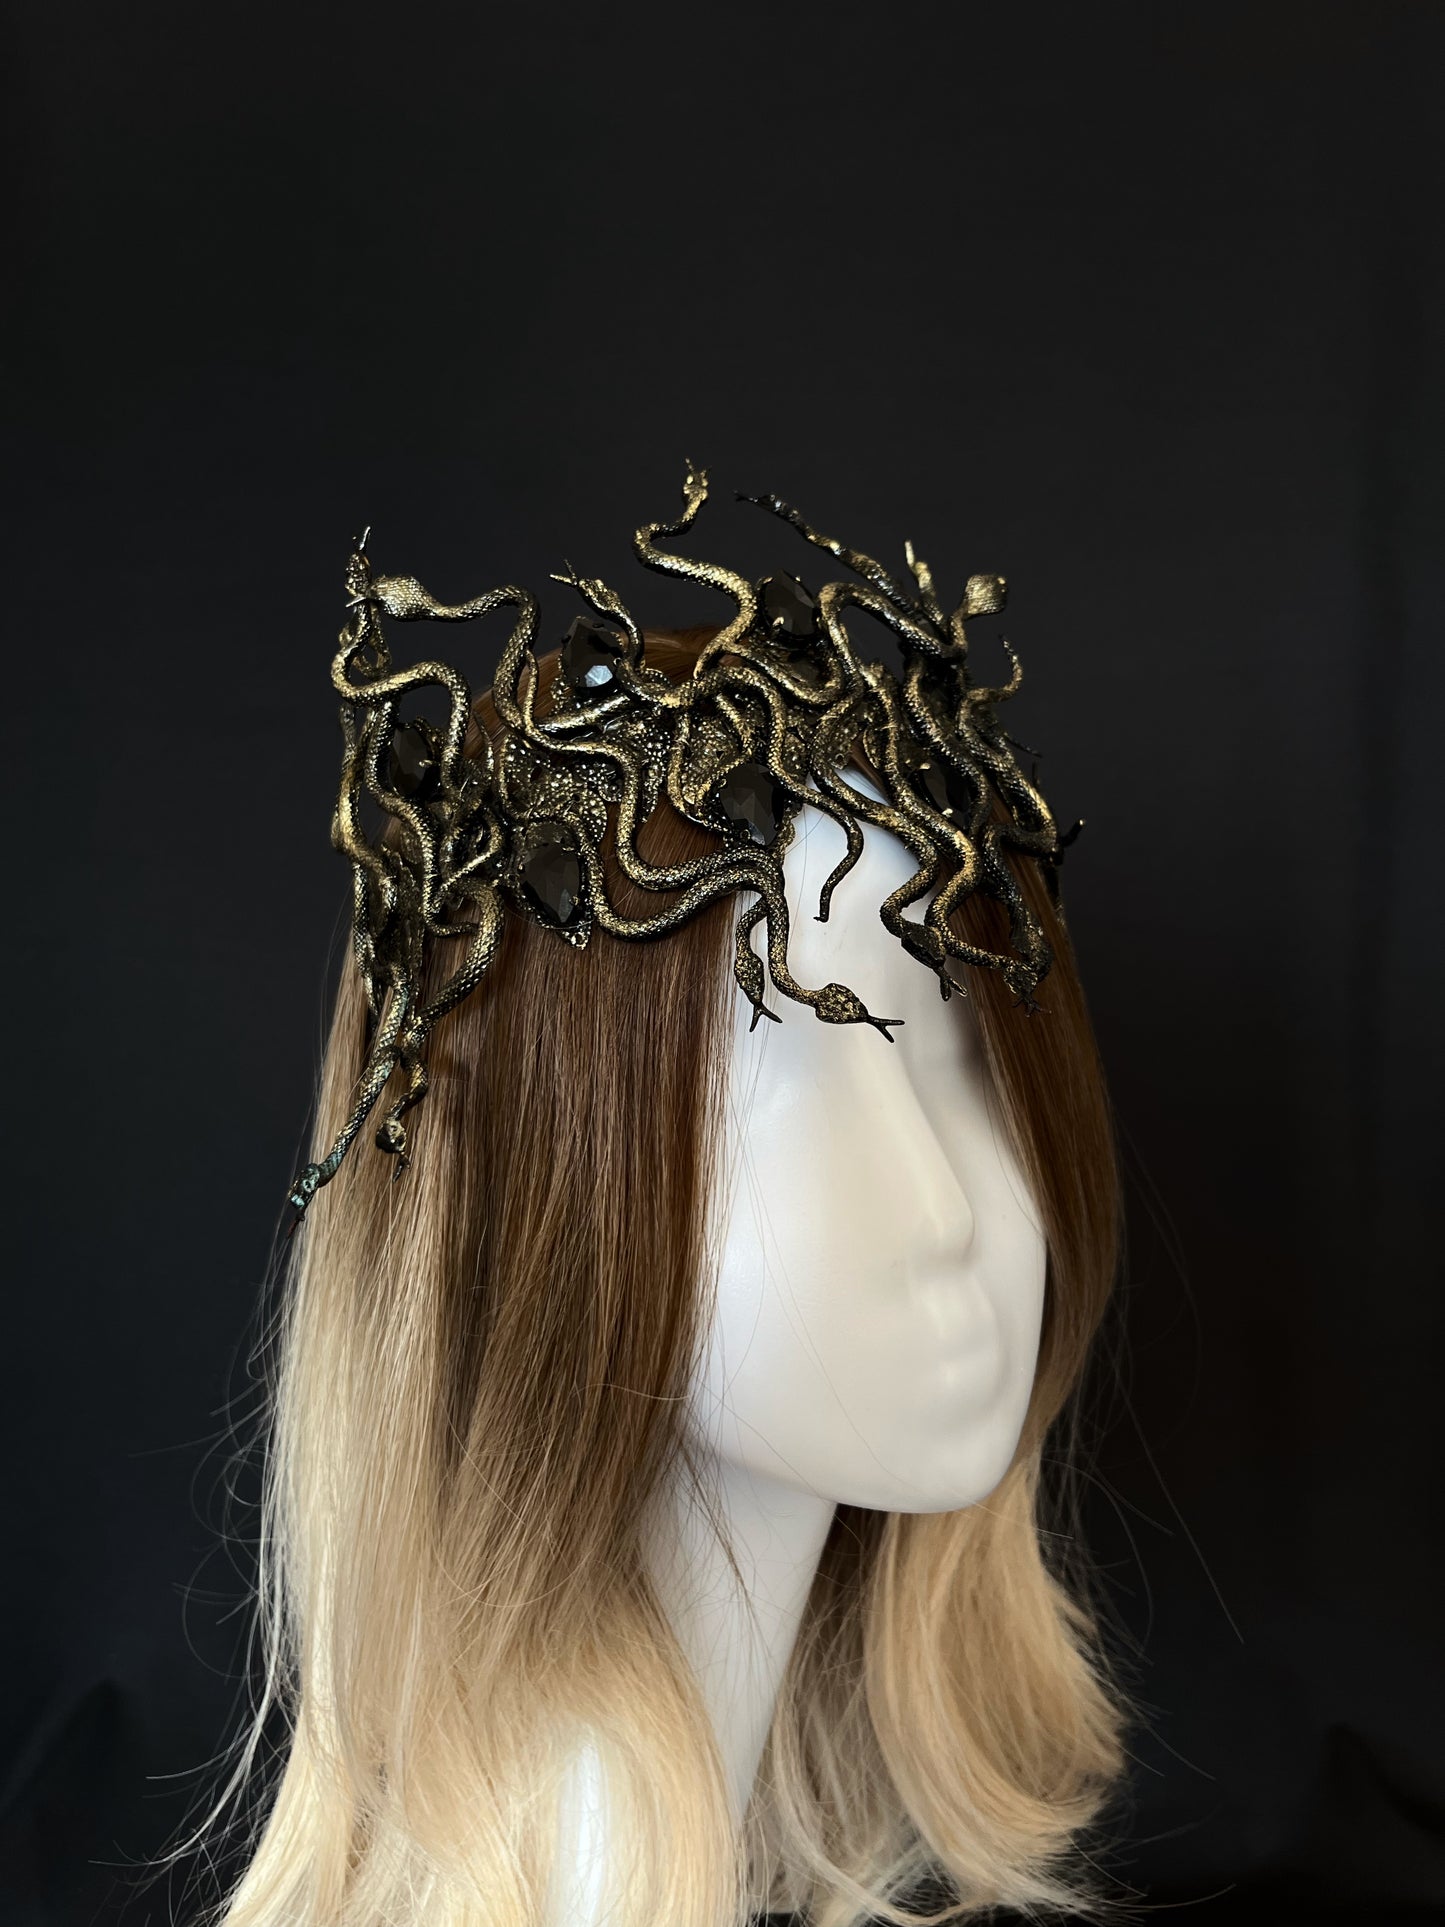 Medusa Gorgon headpiece